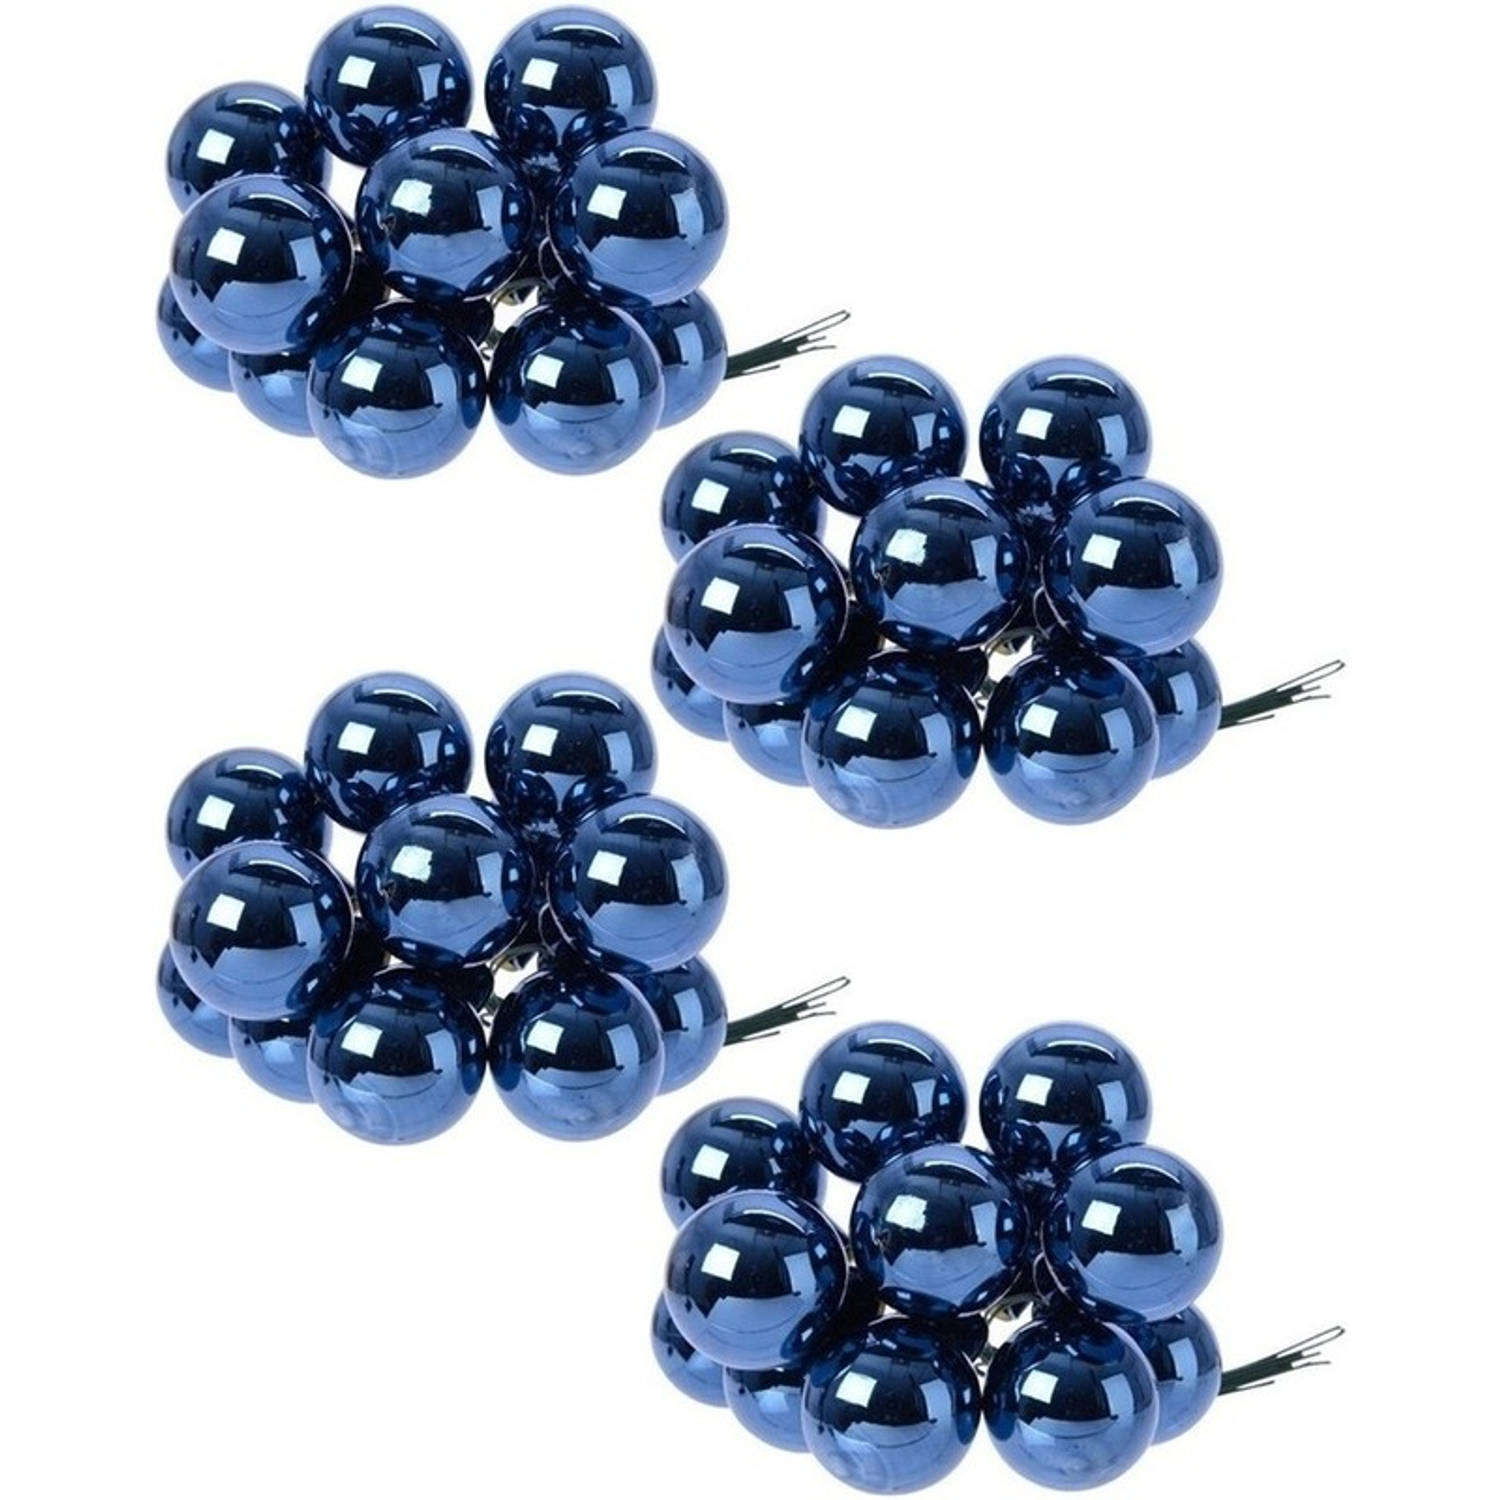 40x Donkerblauwe Mini Kerststukjes Insteek Kerstballetjes 2 Cm Van Glas Kerststukjes